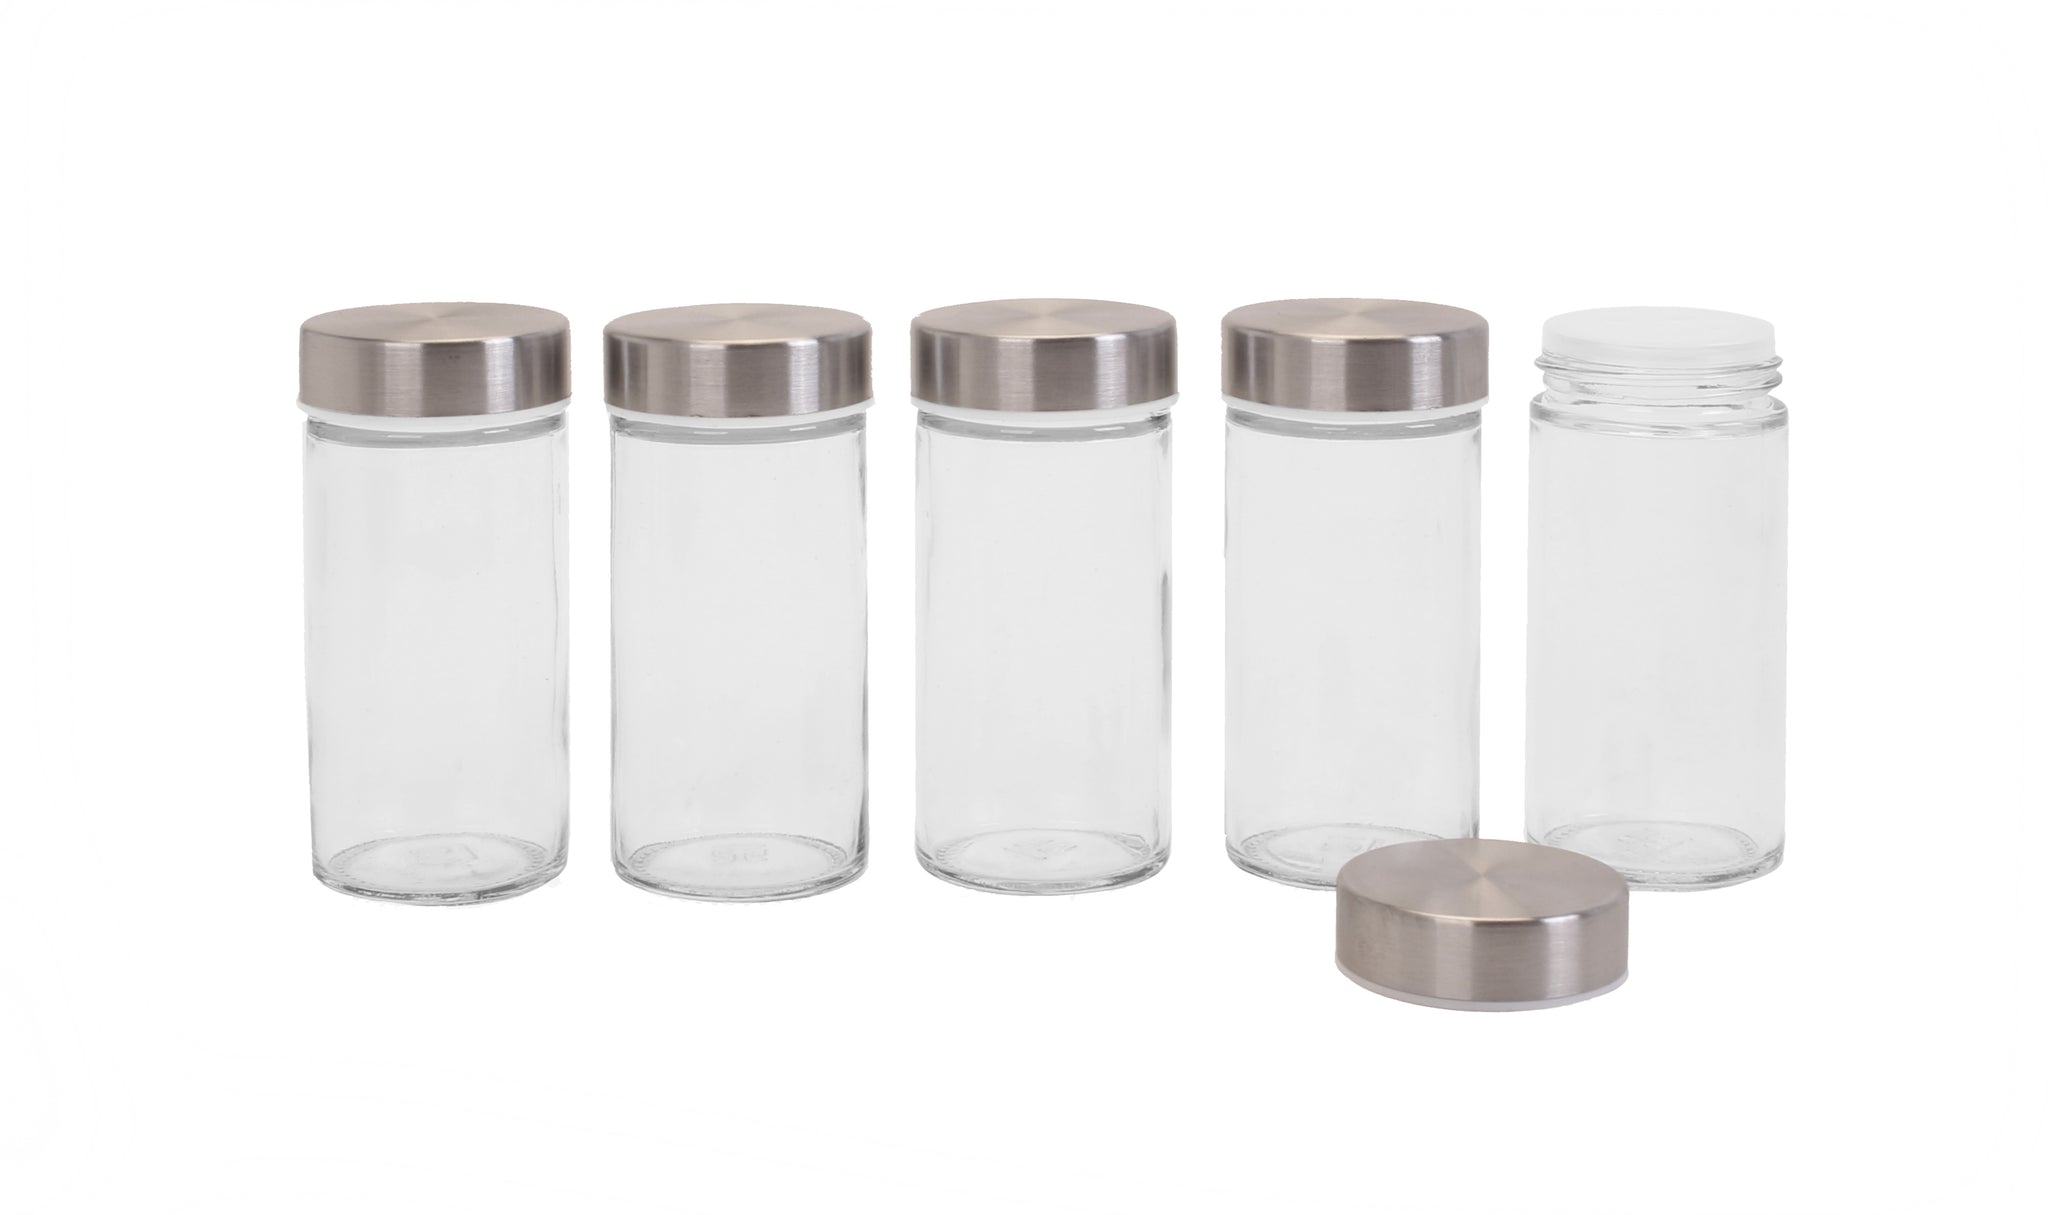 OXO KCSPJARSET Stainless Steel Spice Jars, One Size, Gray